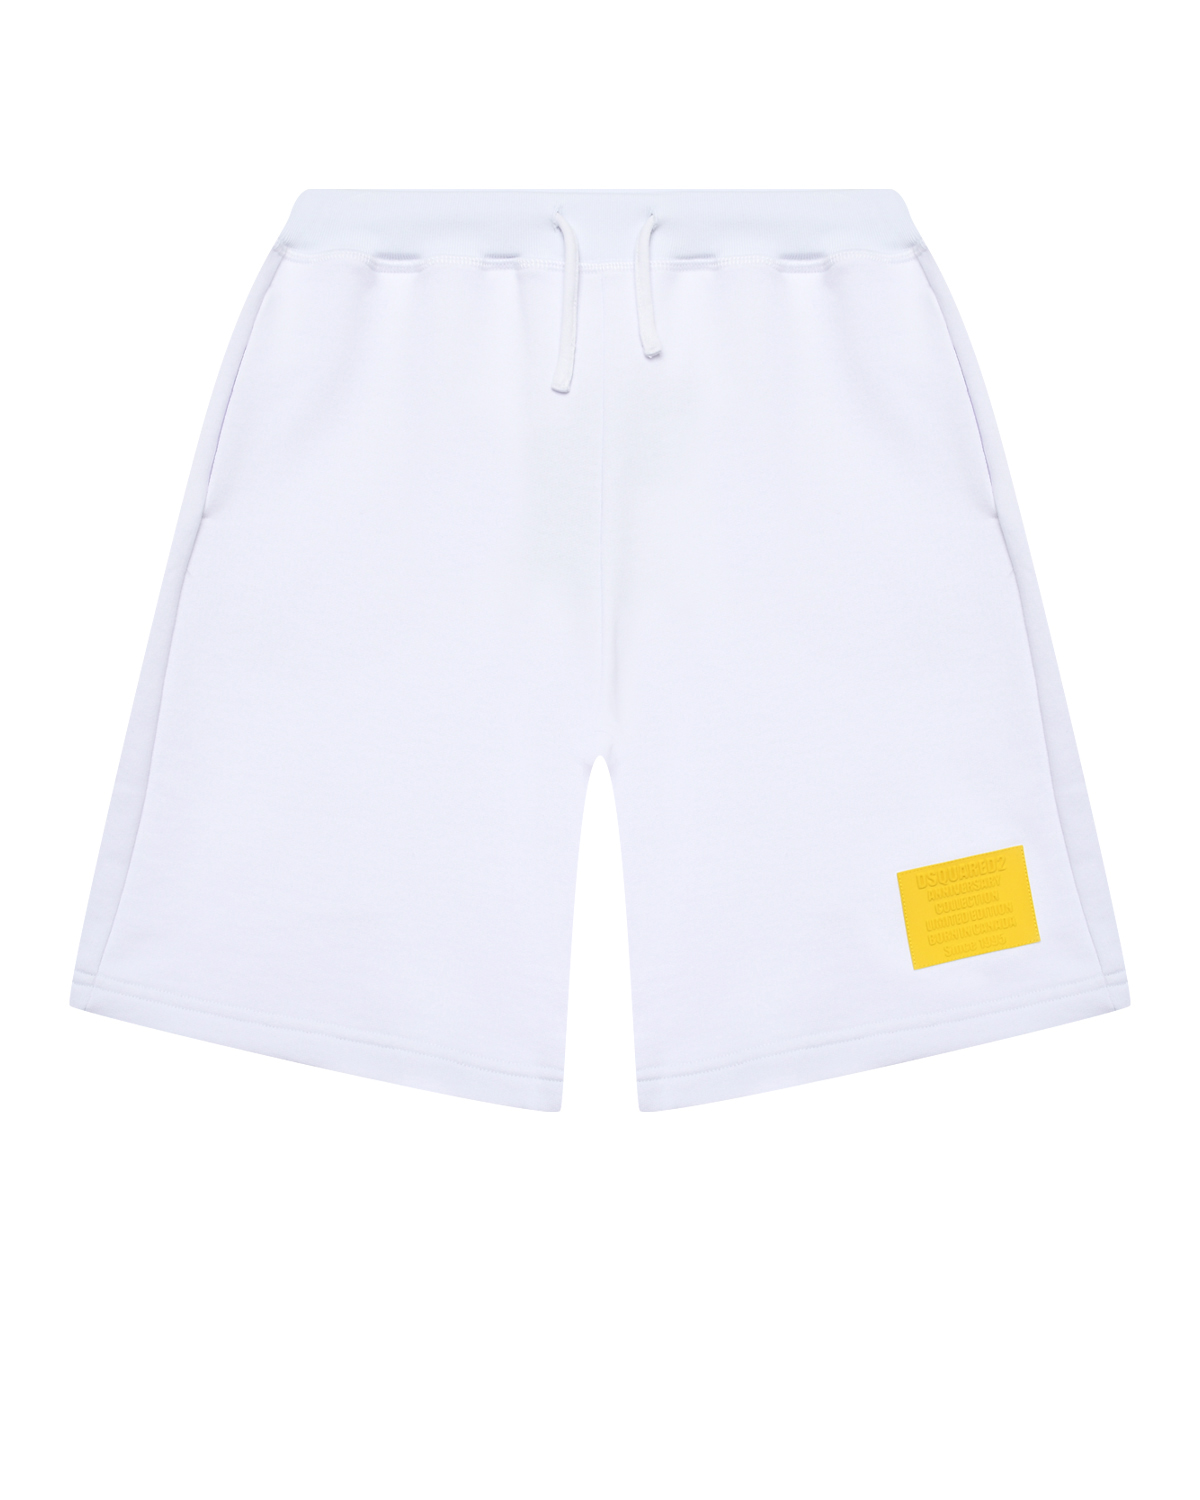 Бермуды с желтым лого, белые Dsquared2, размер 140, цвет белый - фото 1